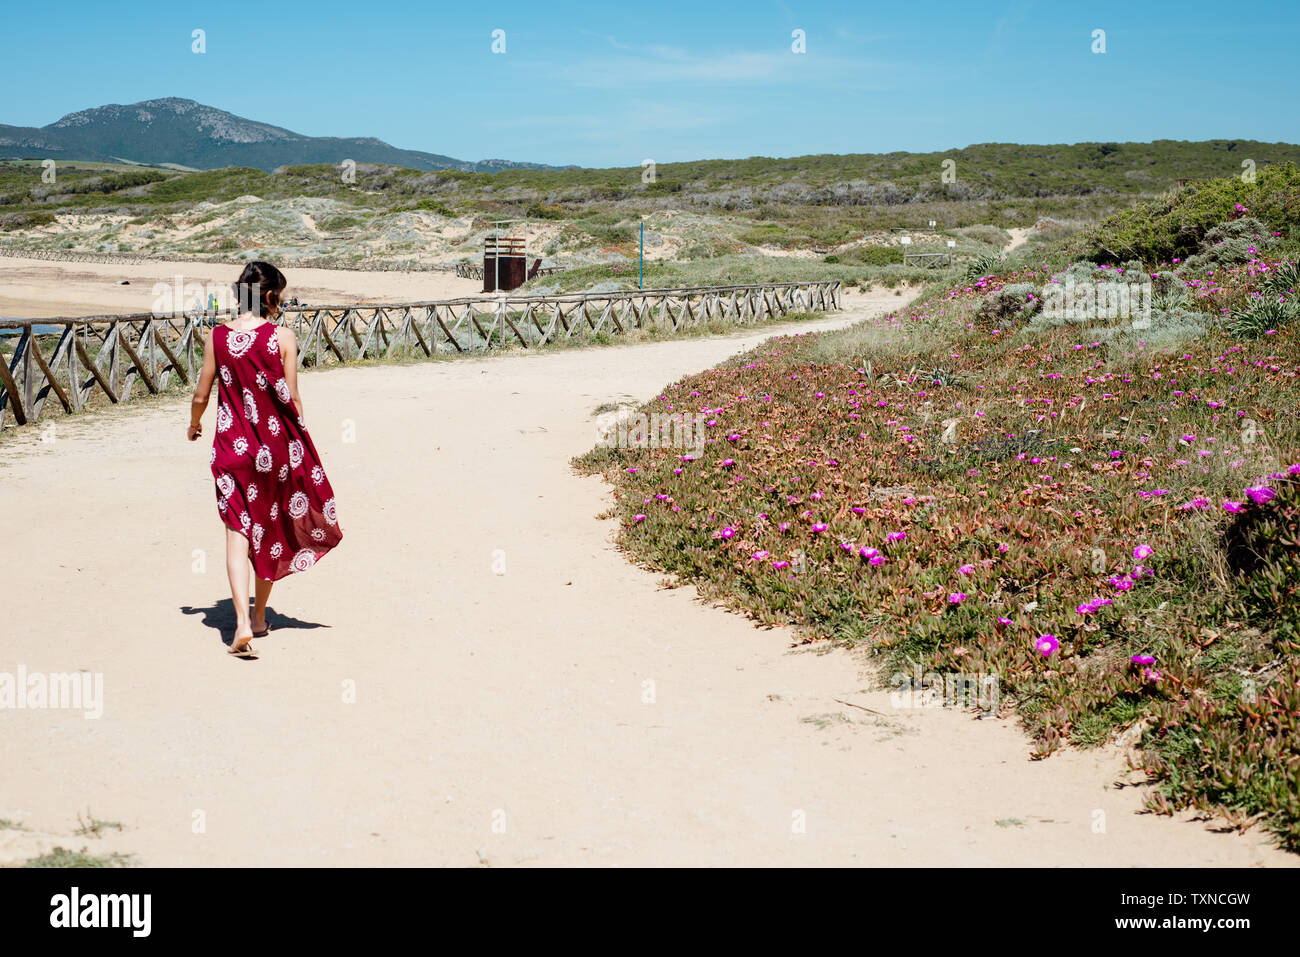 Giovane donna oltrepassando i fiori sulla spiaggia, Alghero, Sardegna, Italia Foto Stock